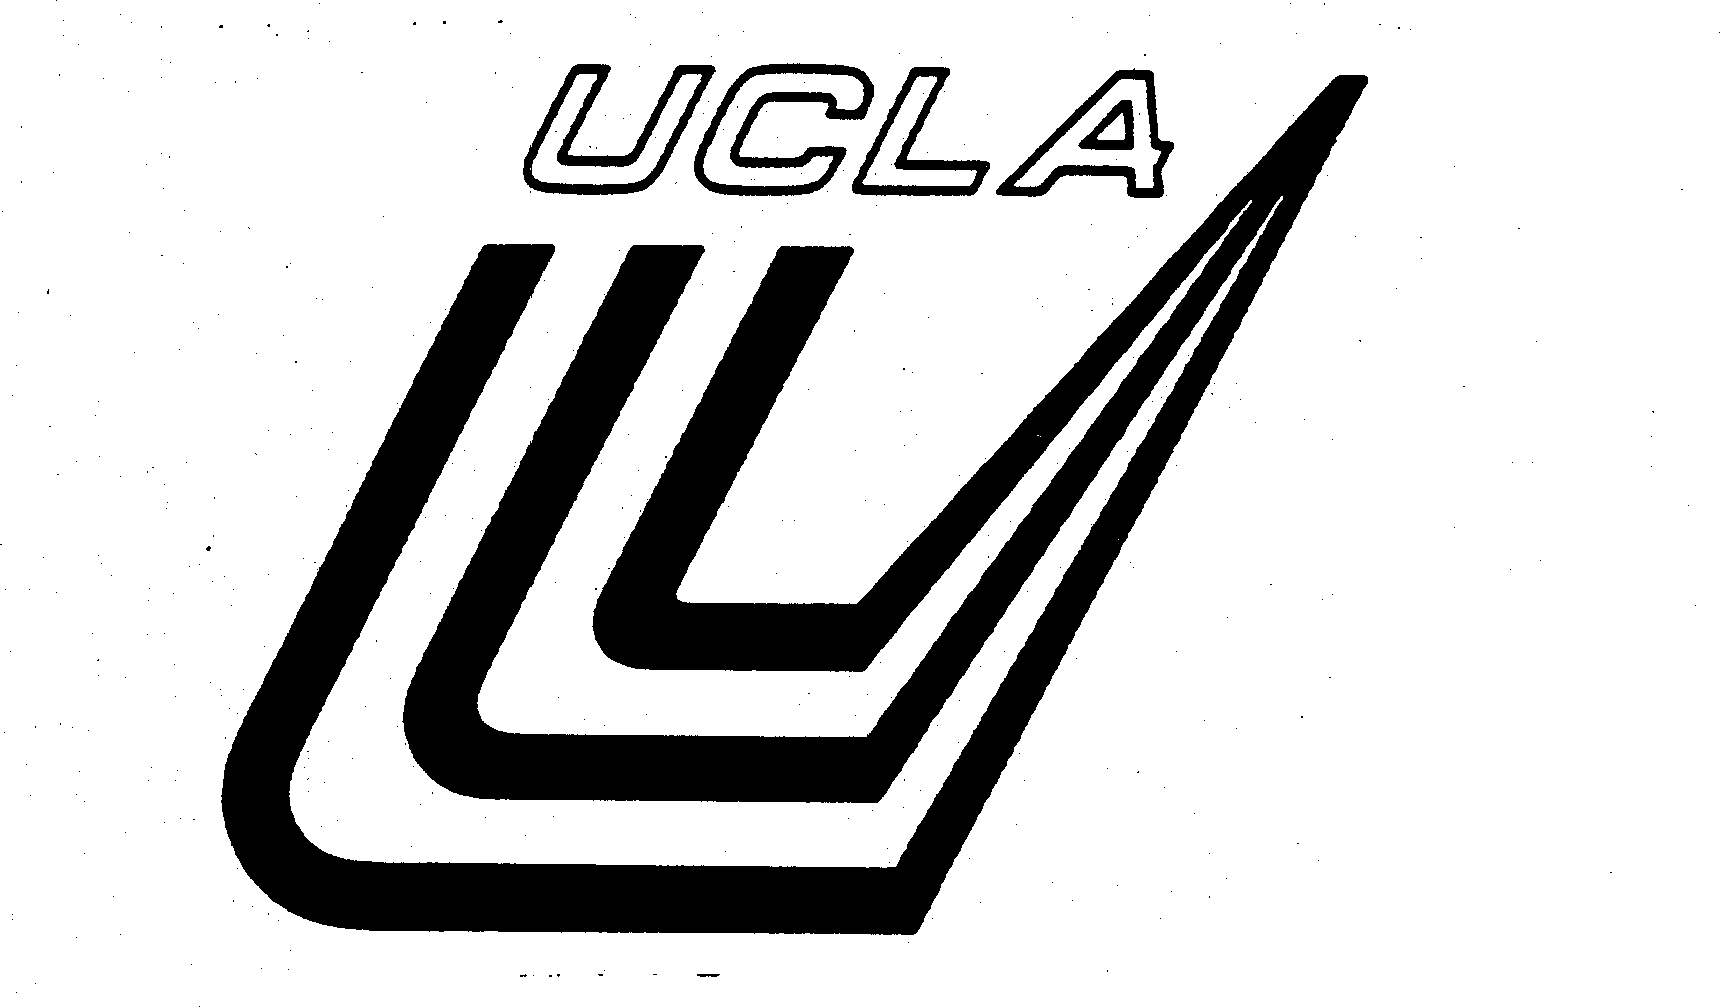 Trademark Logo UCLA